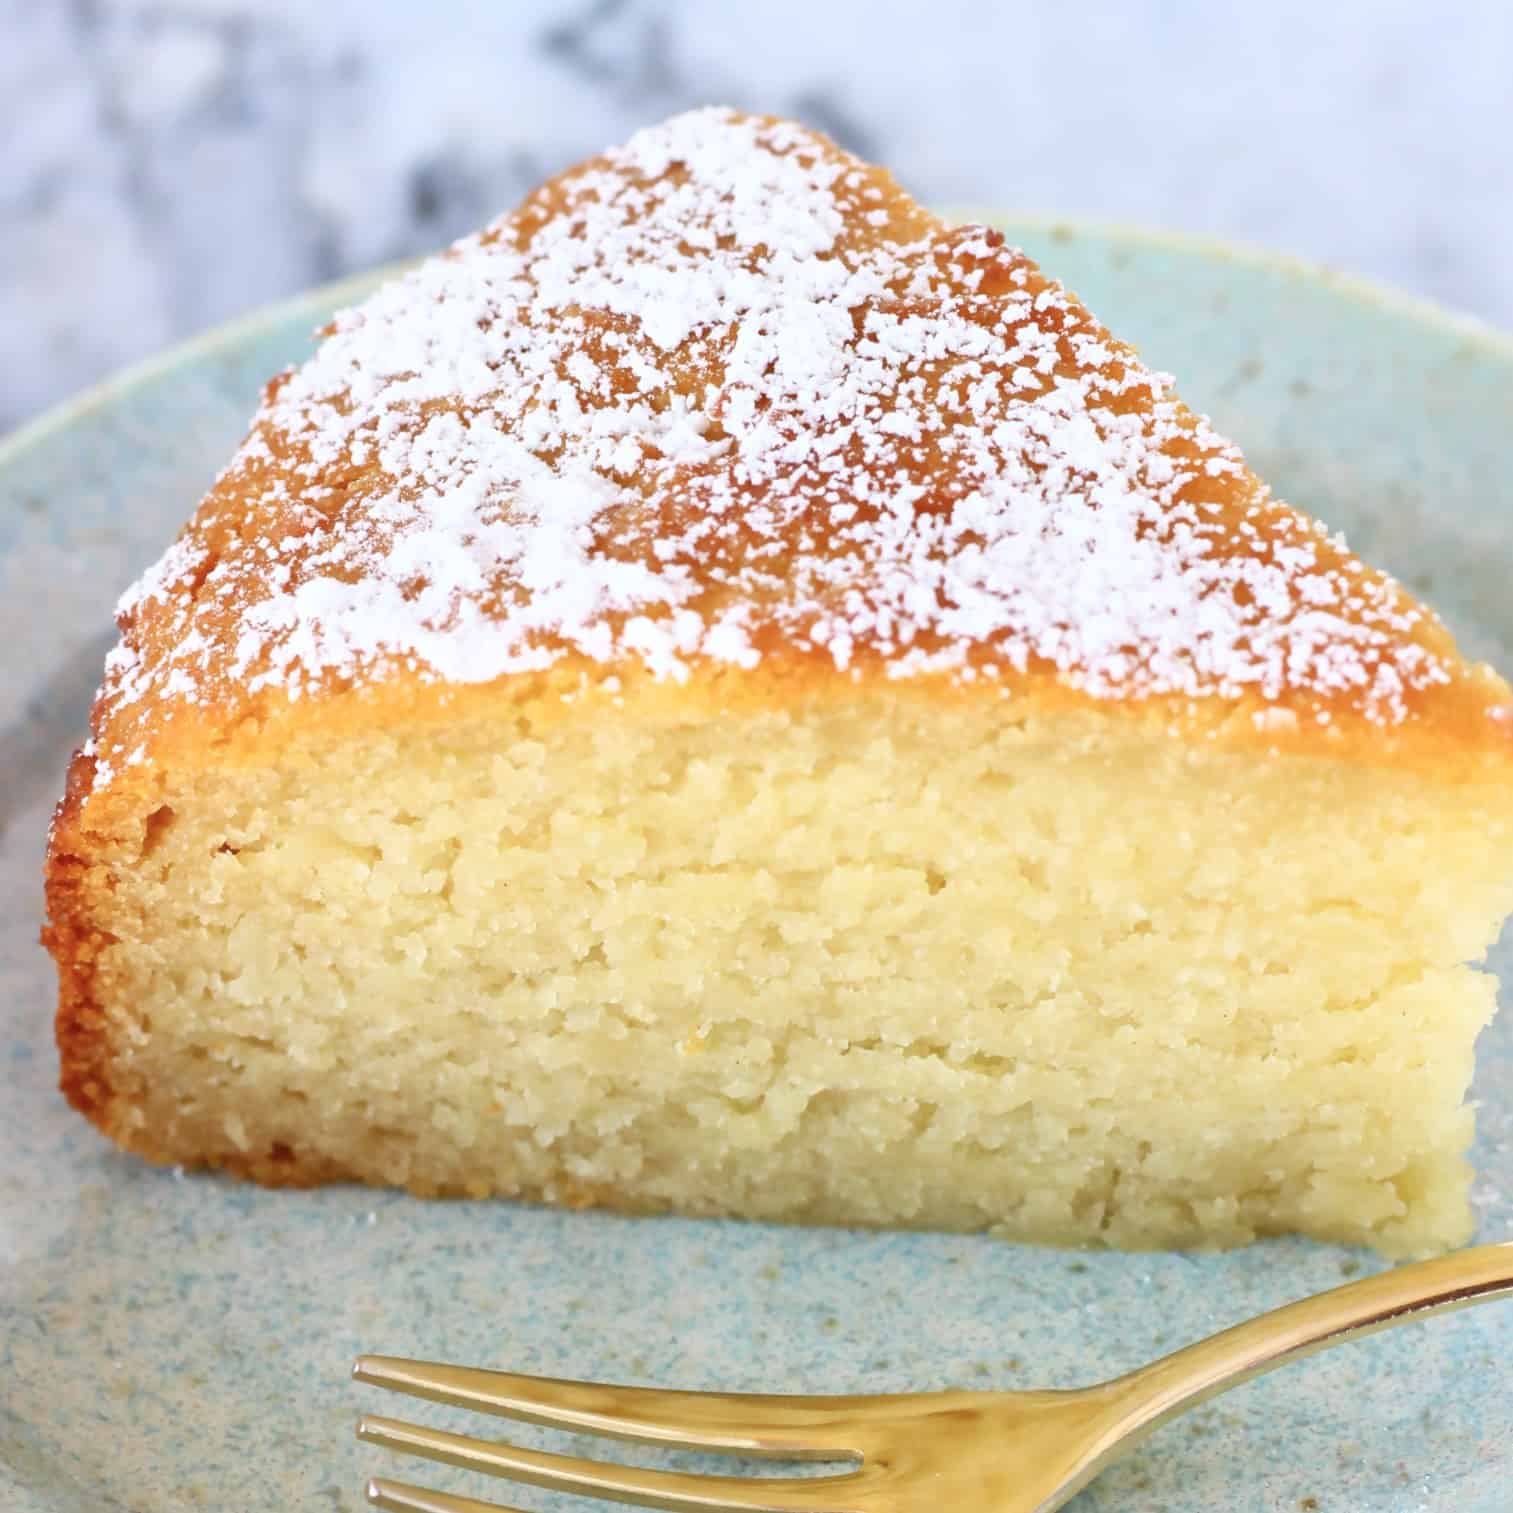 How to make a healthy Gluten-Free Lemon Cake - Lemon Grove Lane